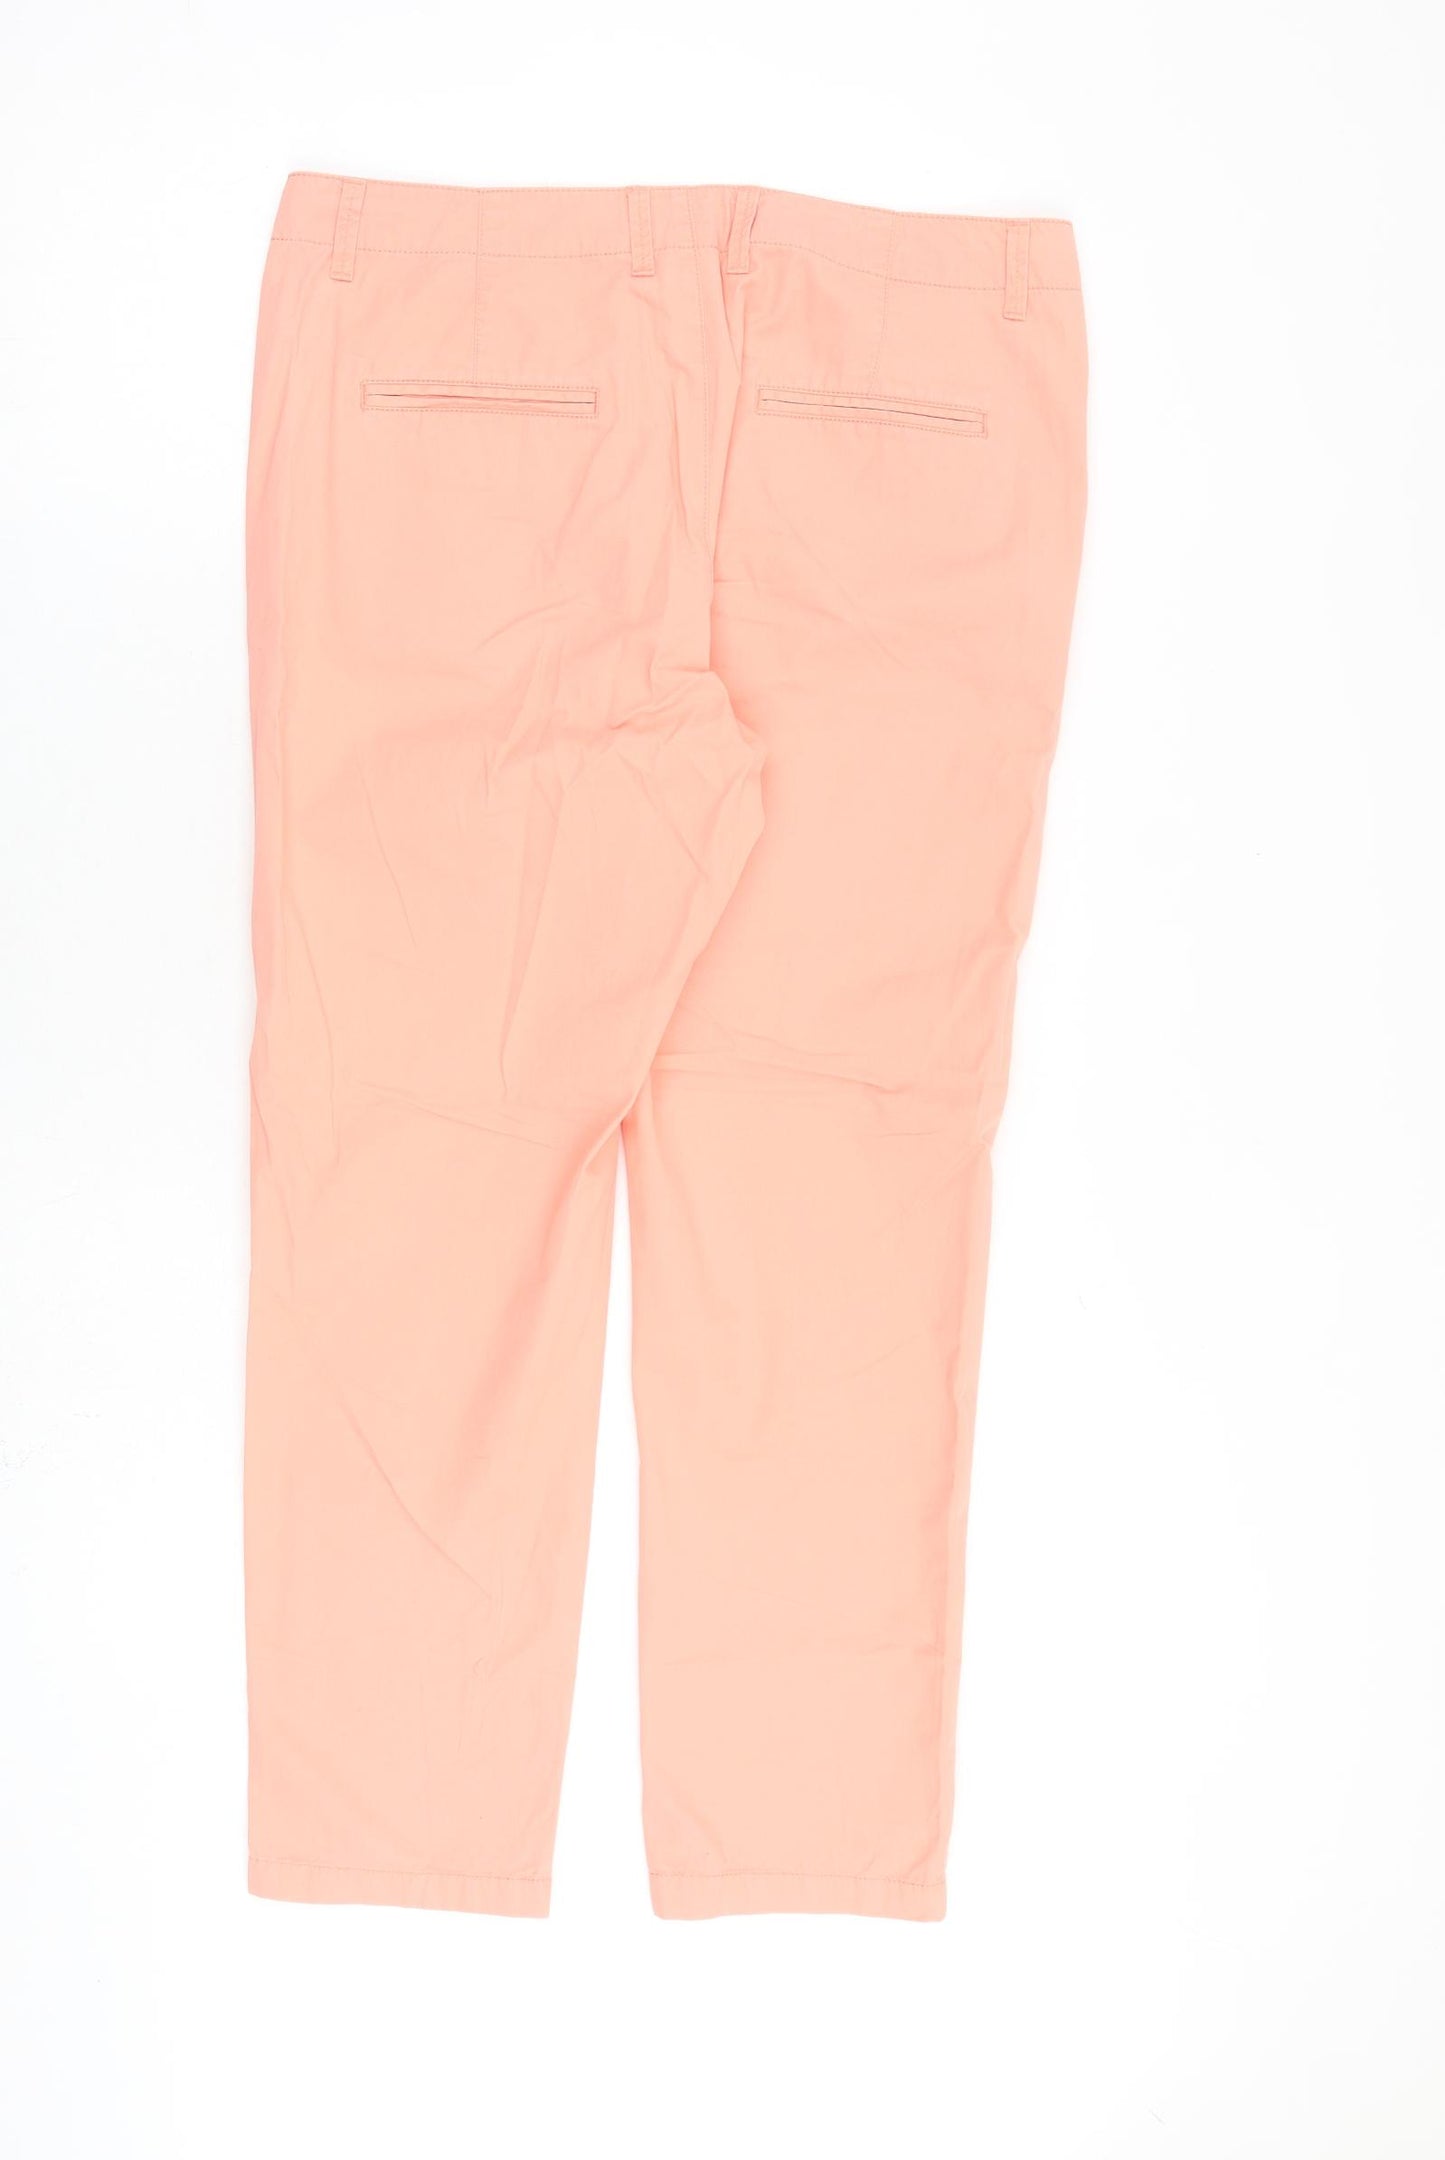 Indigo Womens Pink Cotton Chino Trousers Size 12 L28 in Regular Zip